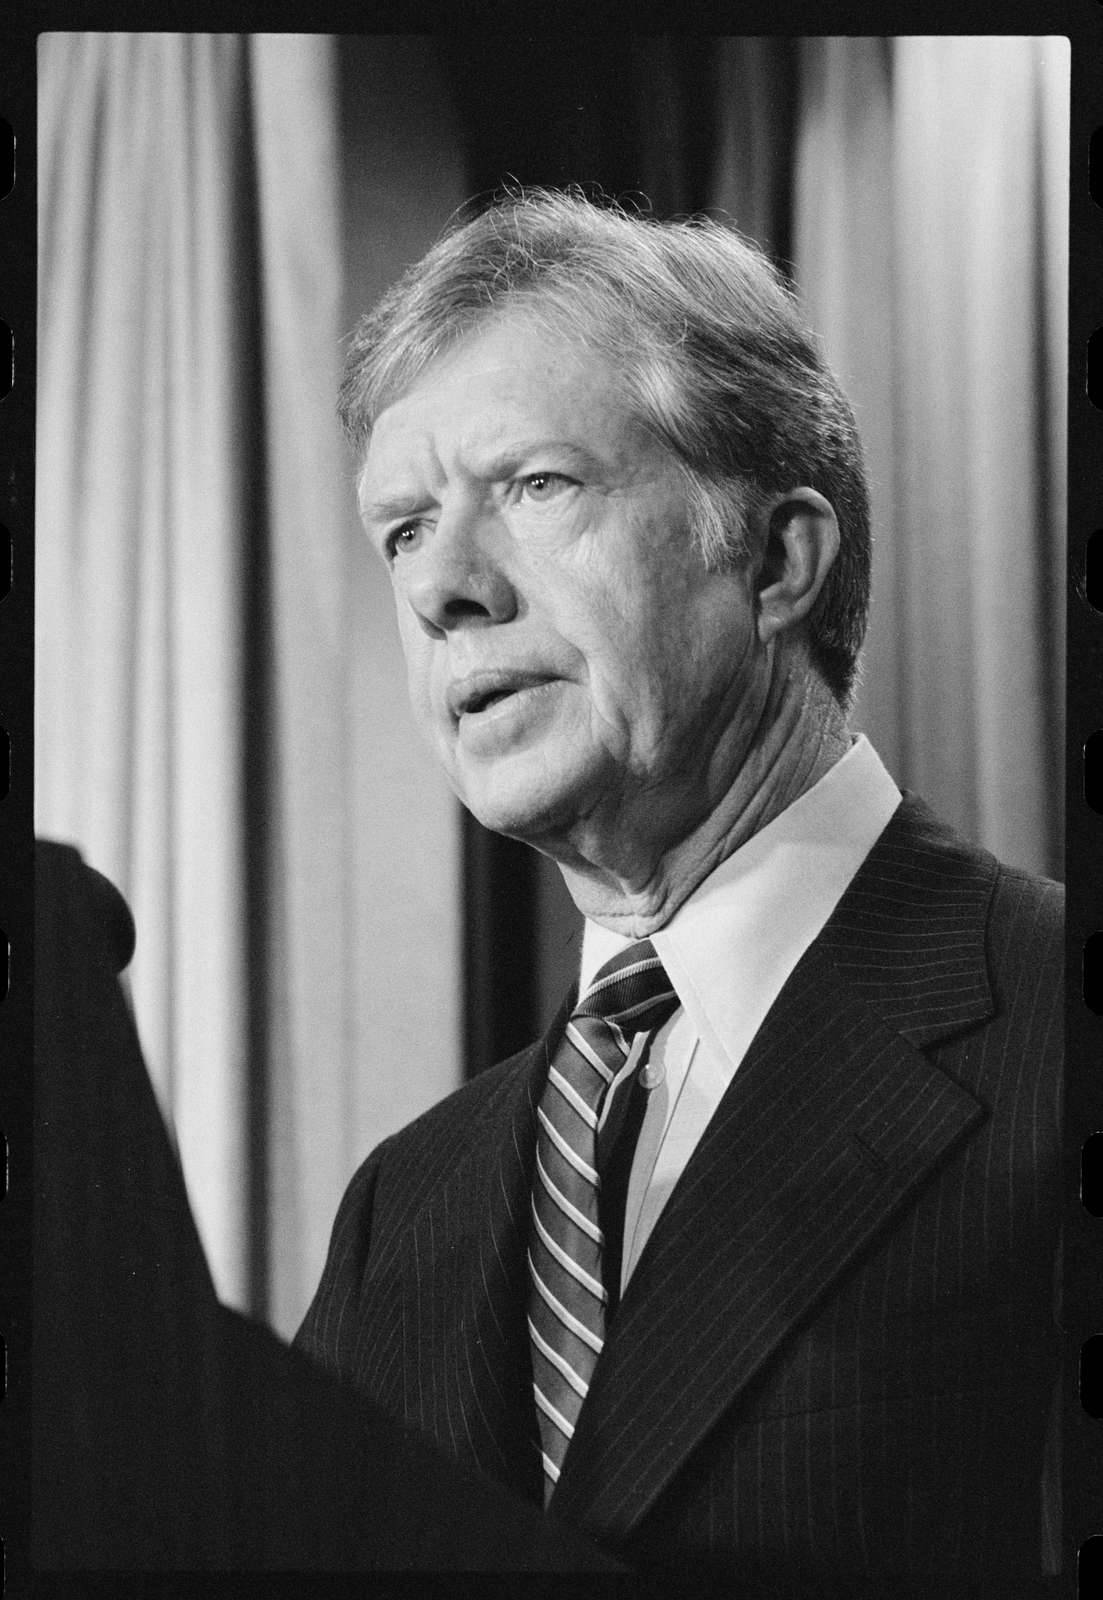 A Powerful Monochrome Portrait of Jimmy Carter Wallpaper